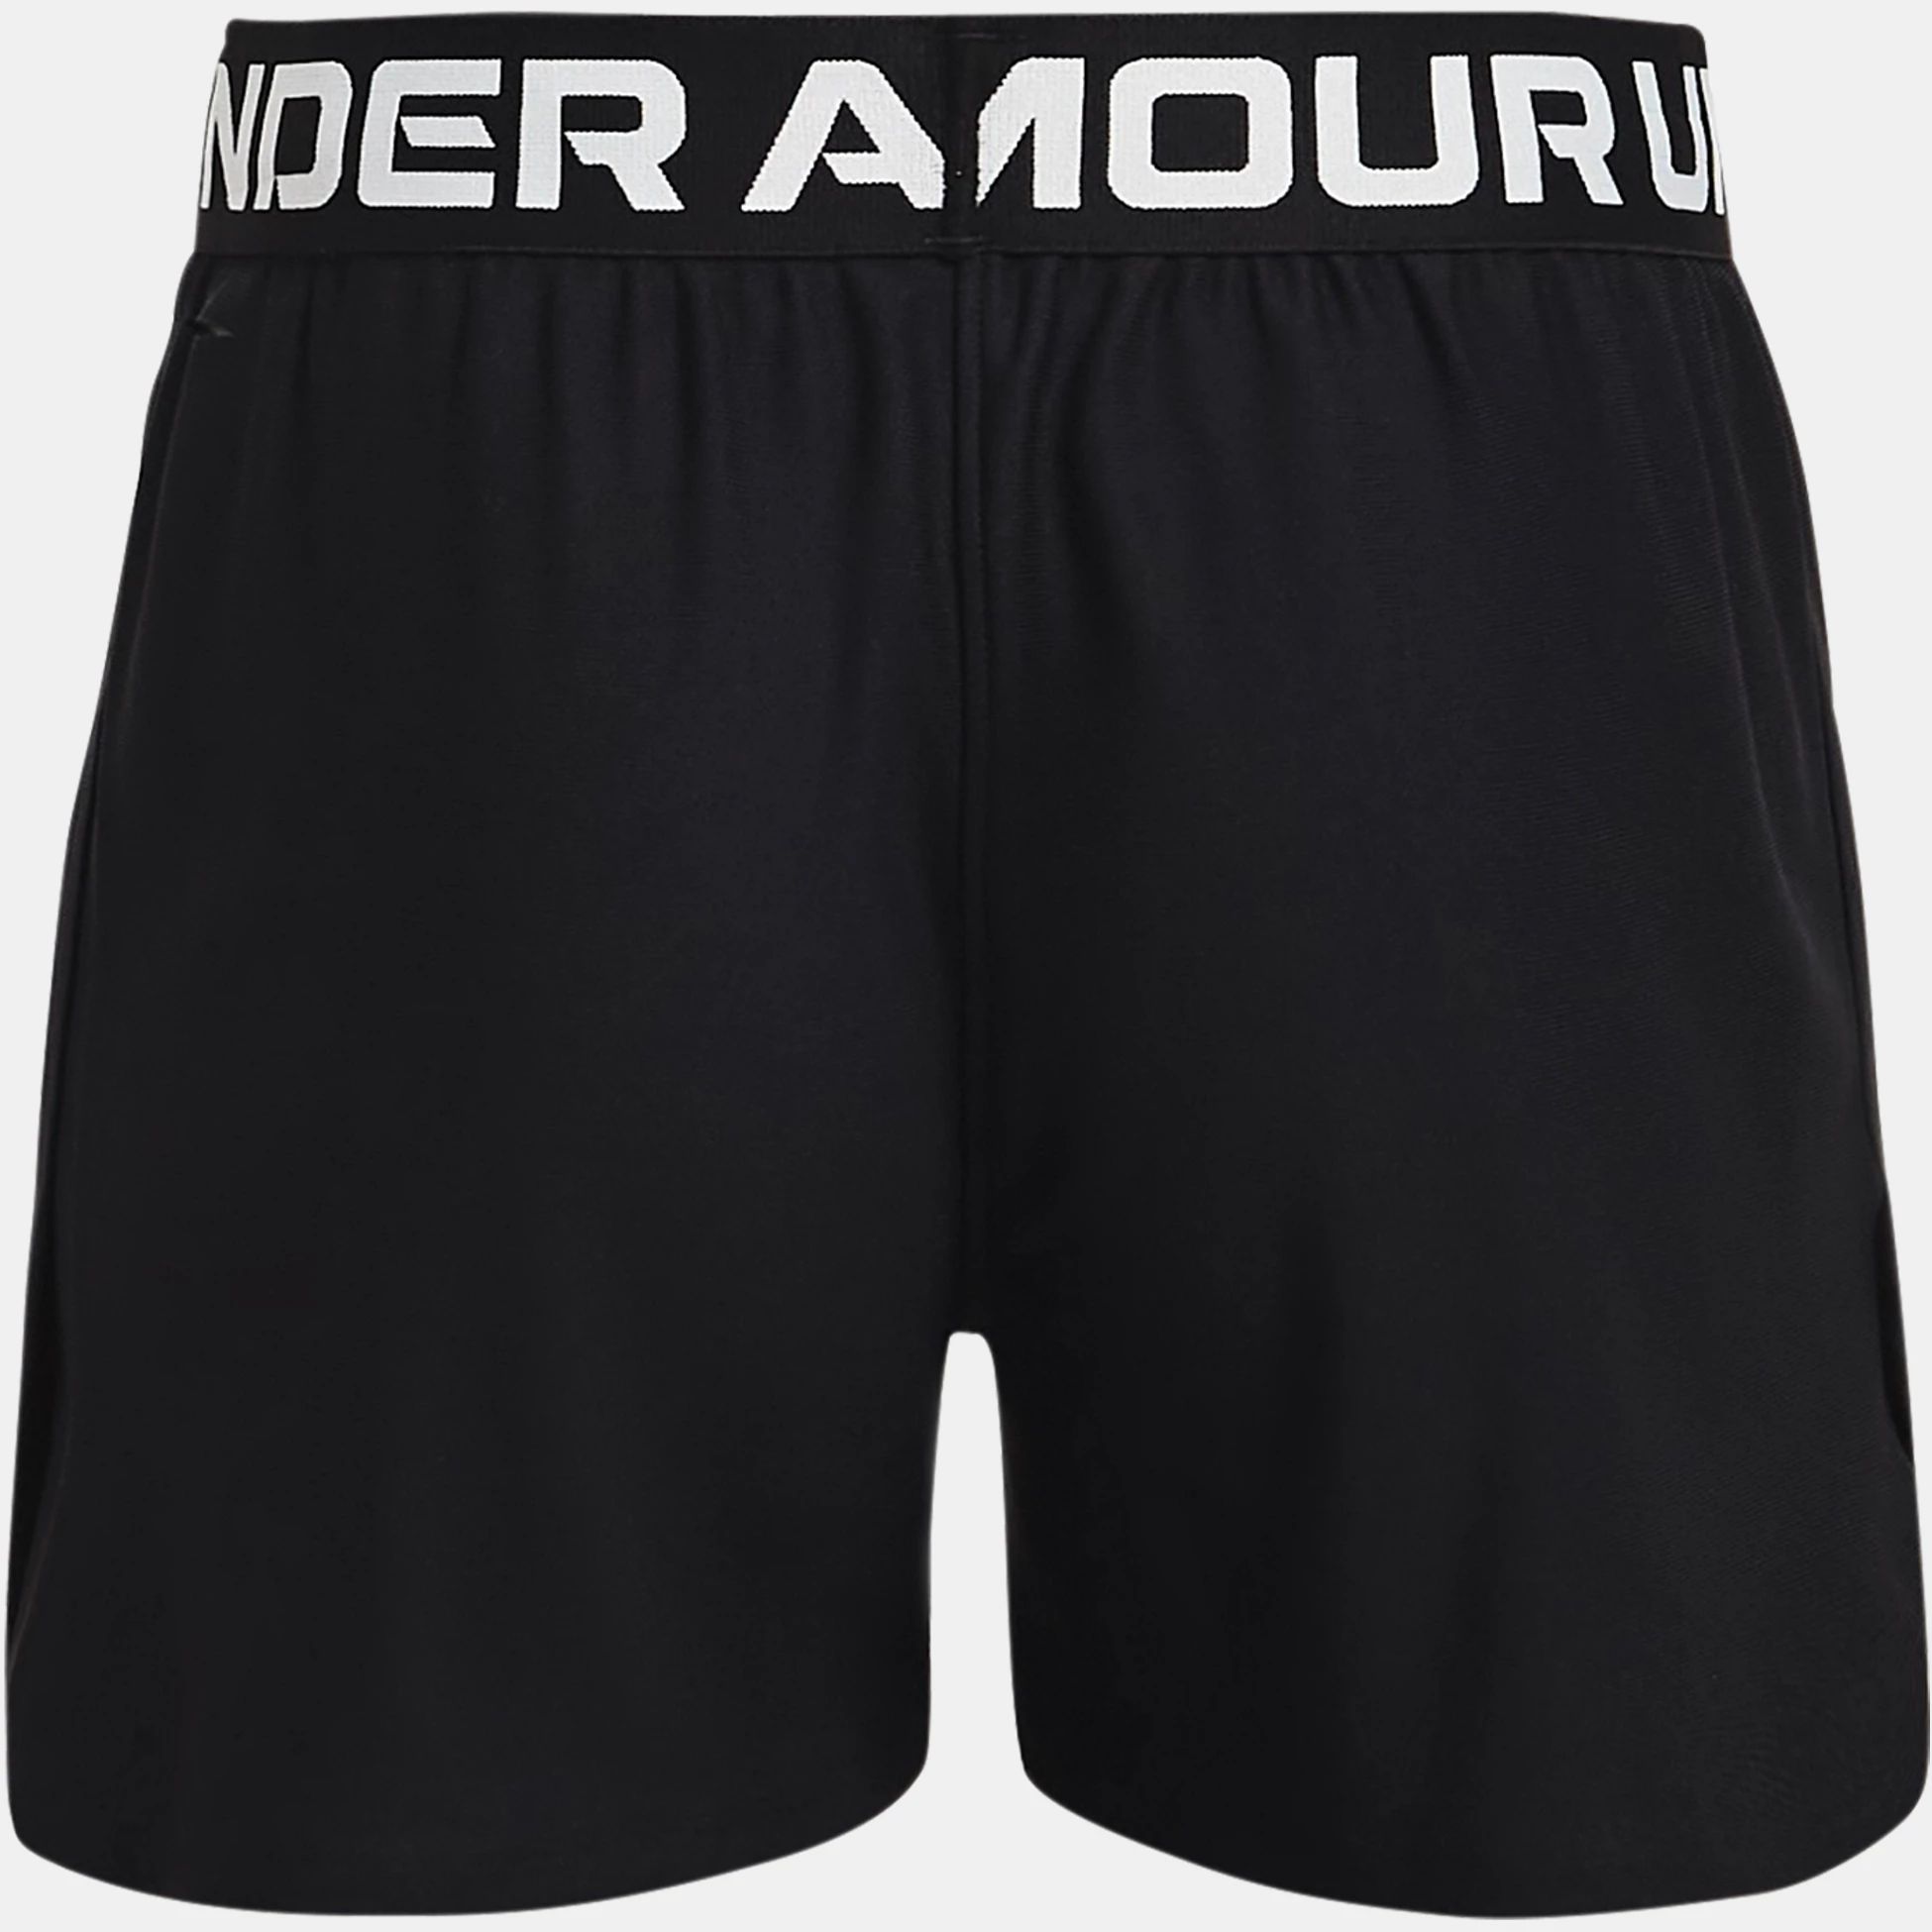 Shorts -  under armour Girls UA Play Up Shorts